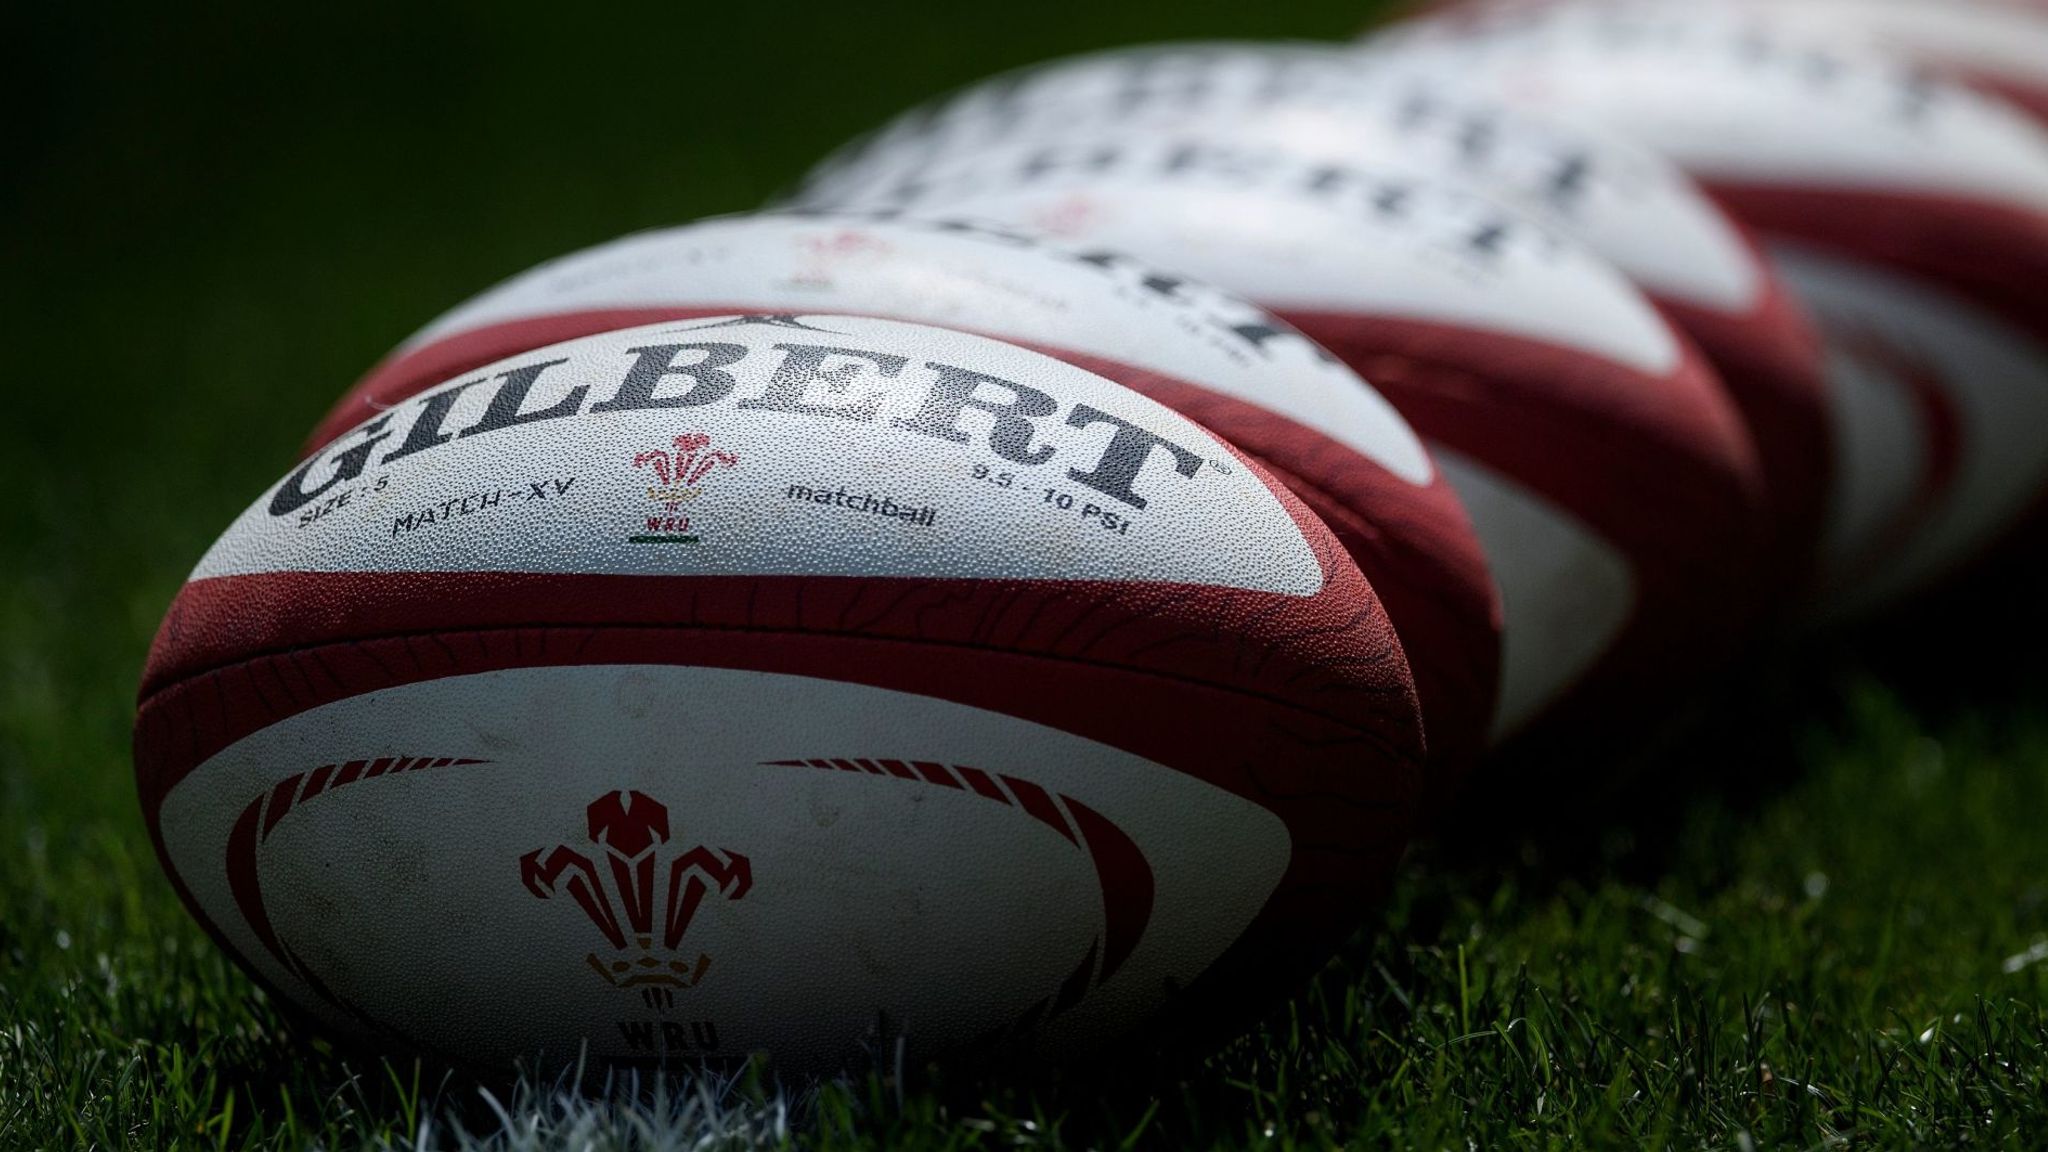 Coronavirus: Welsh Rugby Union Cancel 2019 20 Season. Rugby Union News